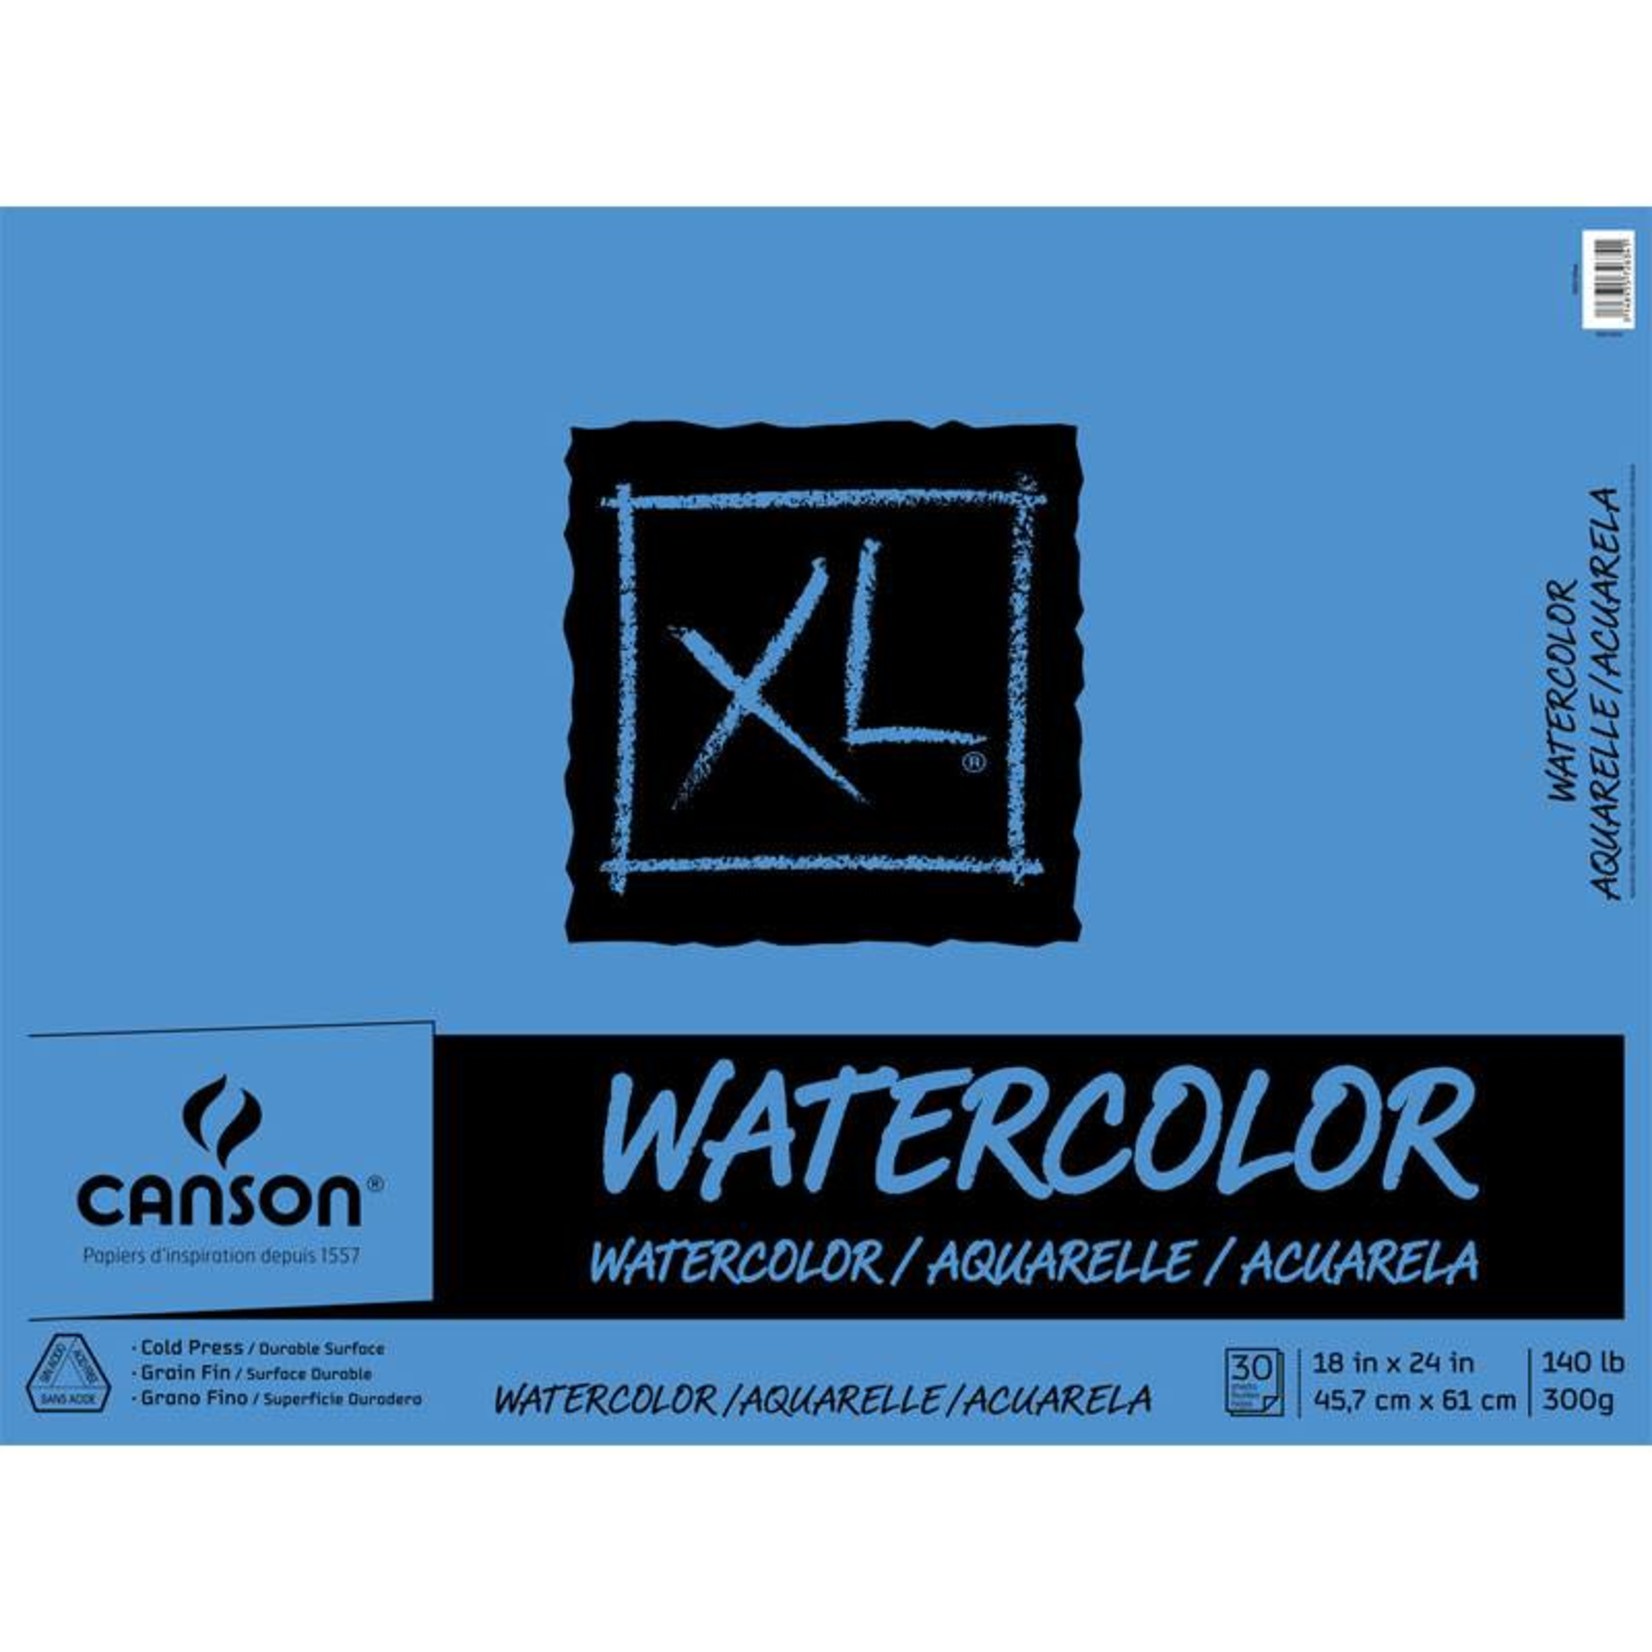 CANSON CANSON XL WATERCOLOUR PAD 140LB 11x15 TAPE BOUND 30/SHEET